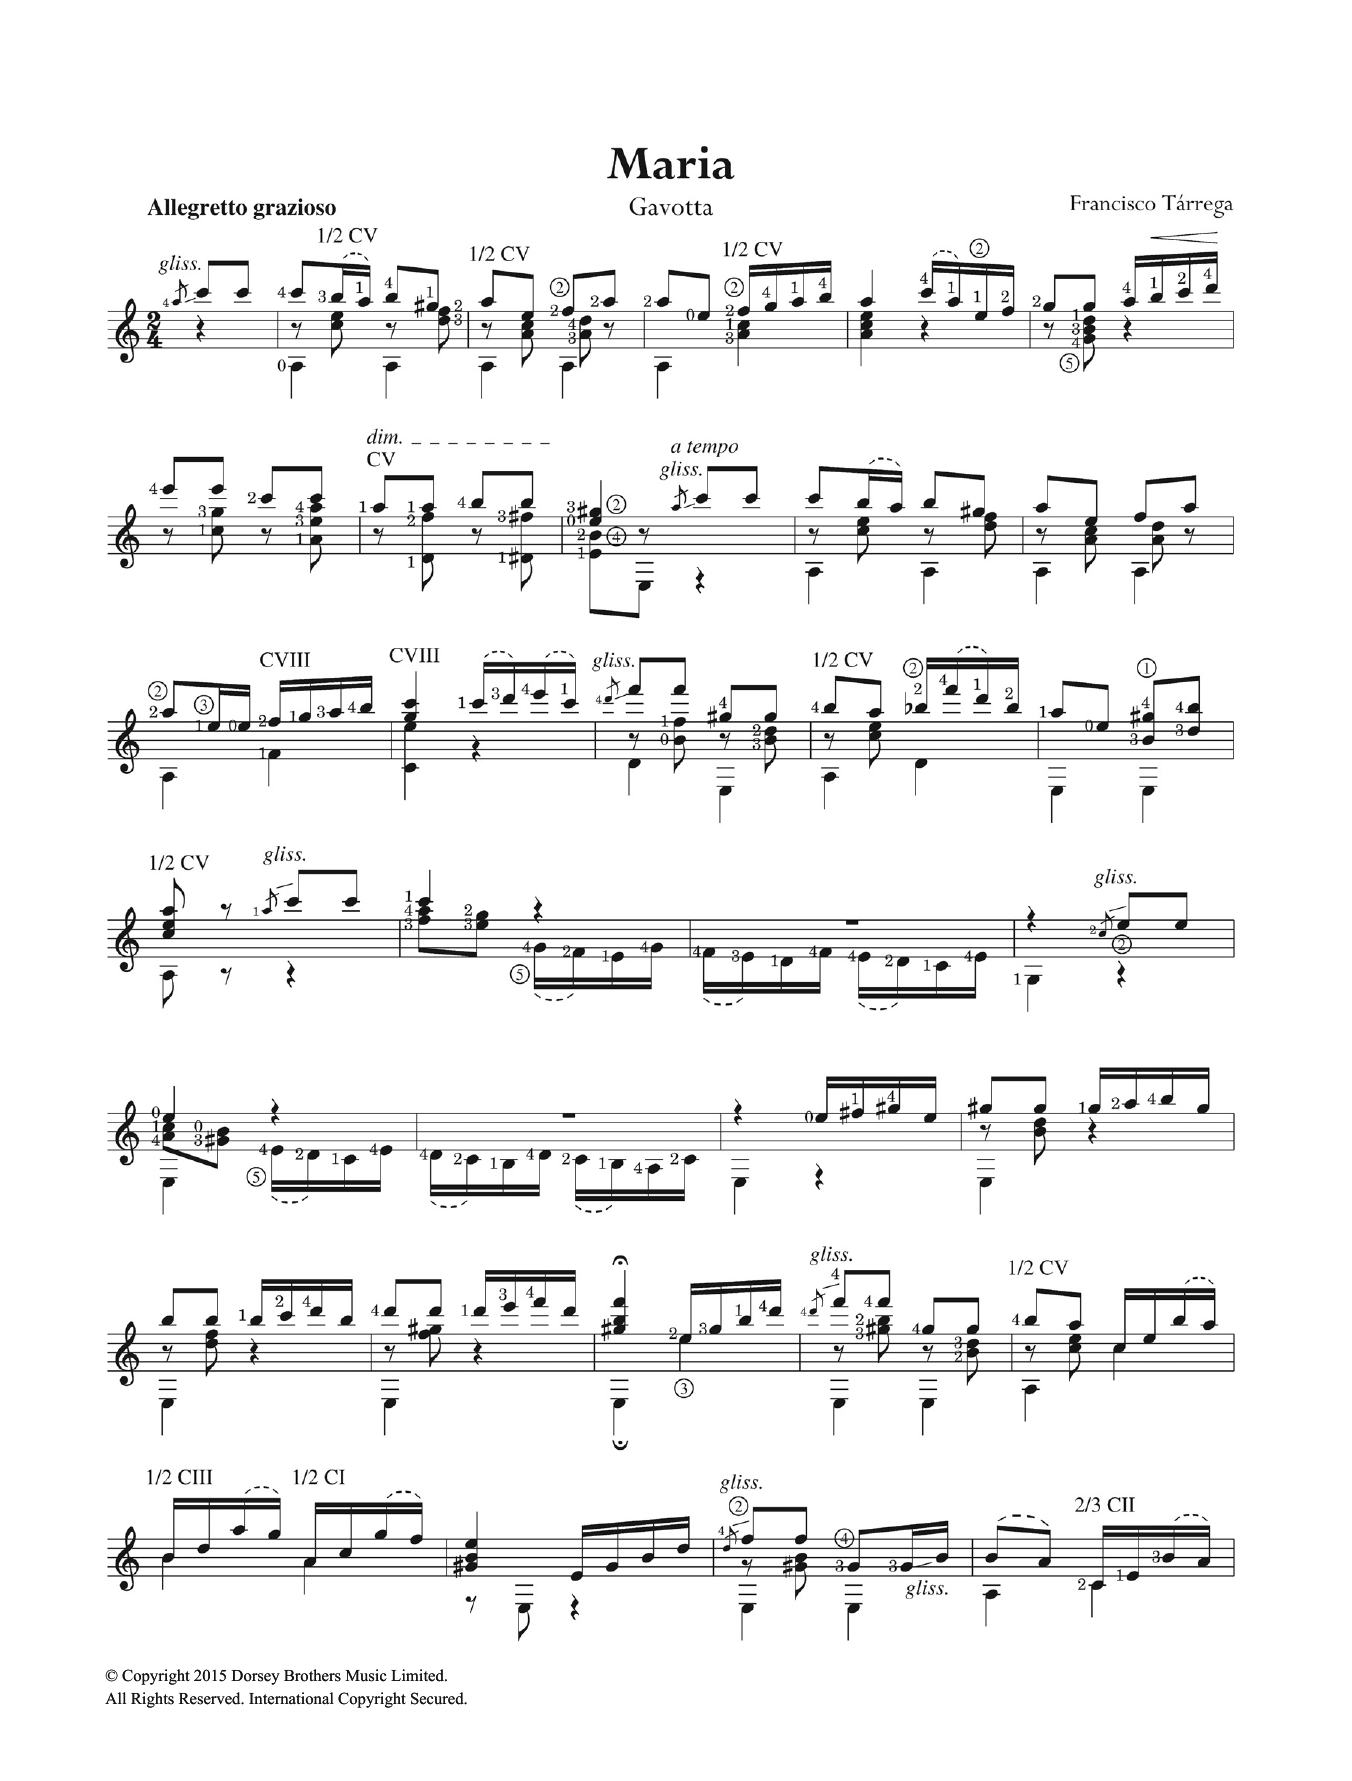 Francisco Tárrega Maria, Gavotta Sheet Music Notes & Chords for Guitar - Download or Print PDF